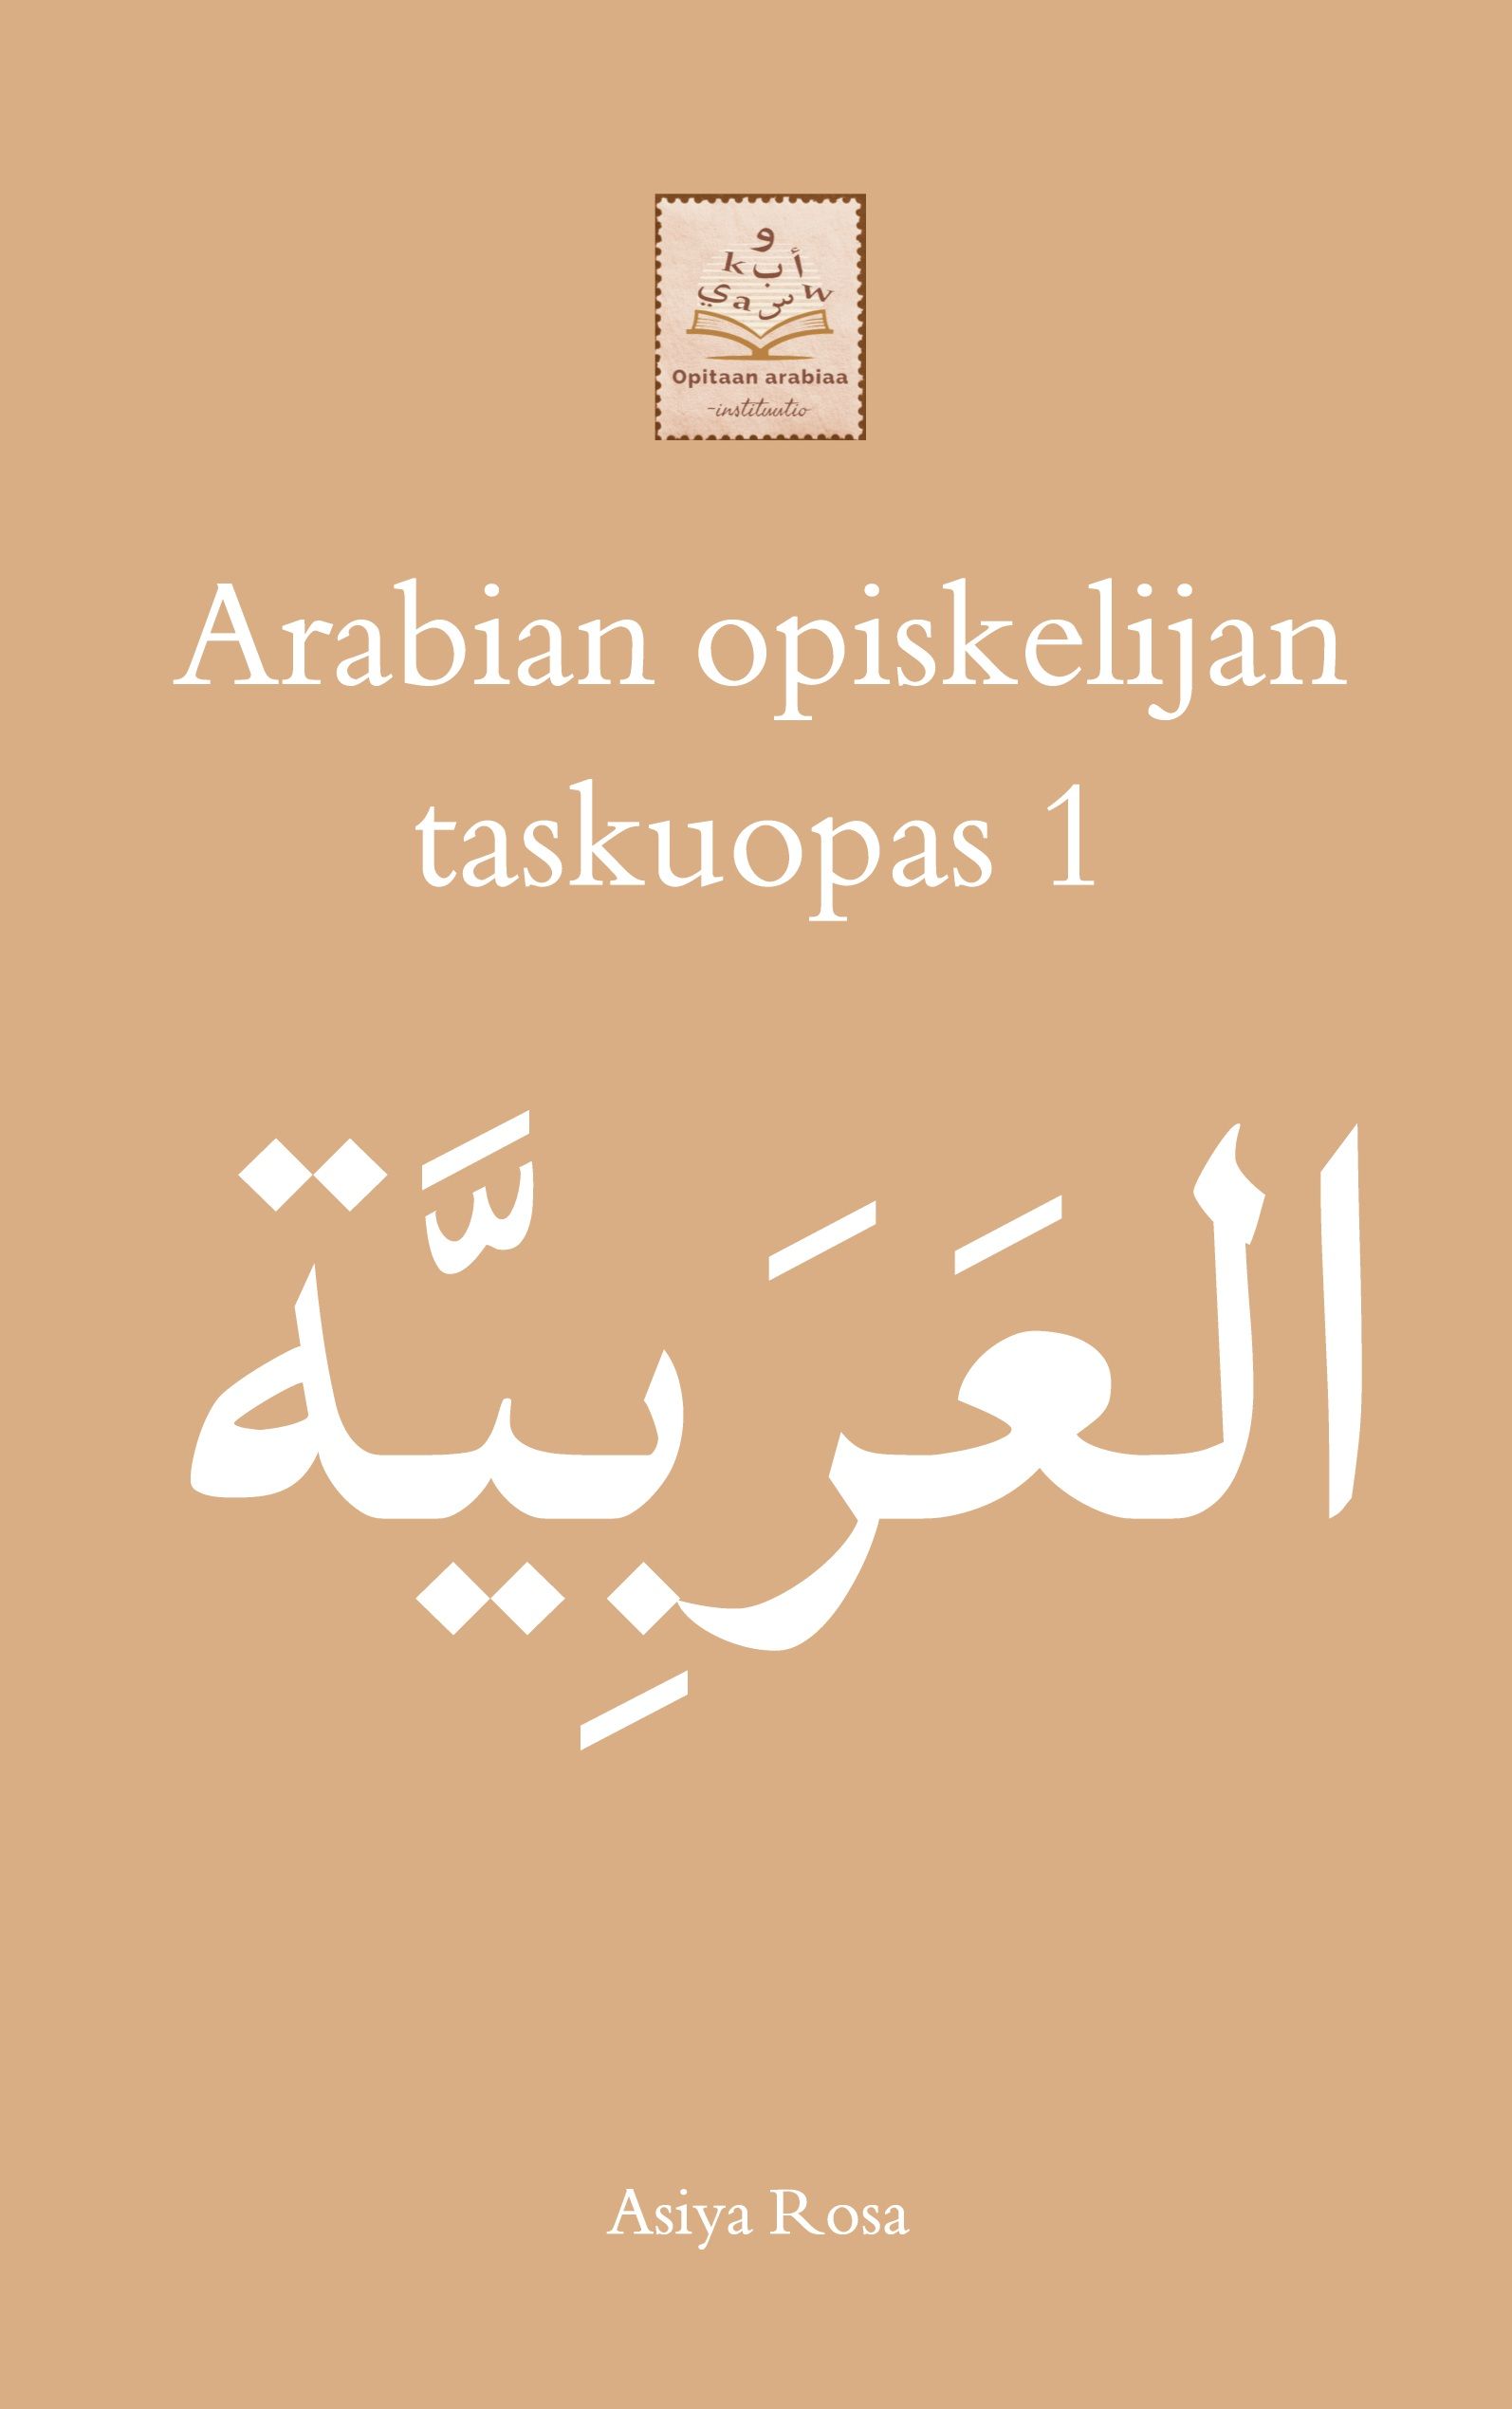 Asiya Rosa : Arabian opiskelijan taskuopas 1